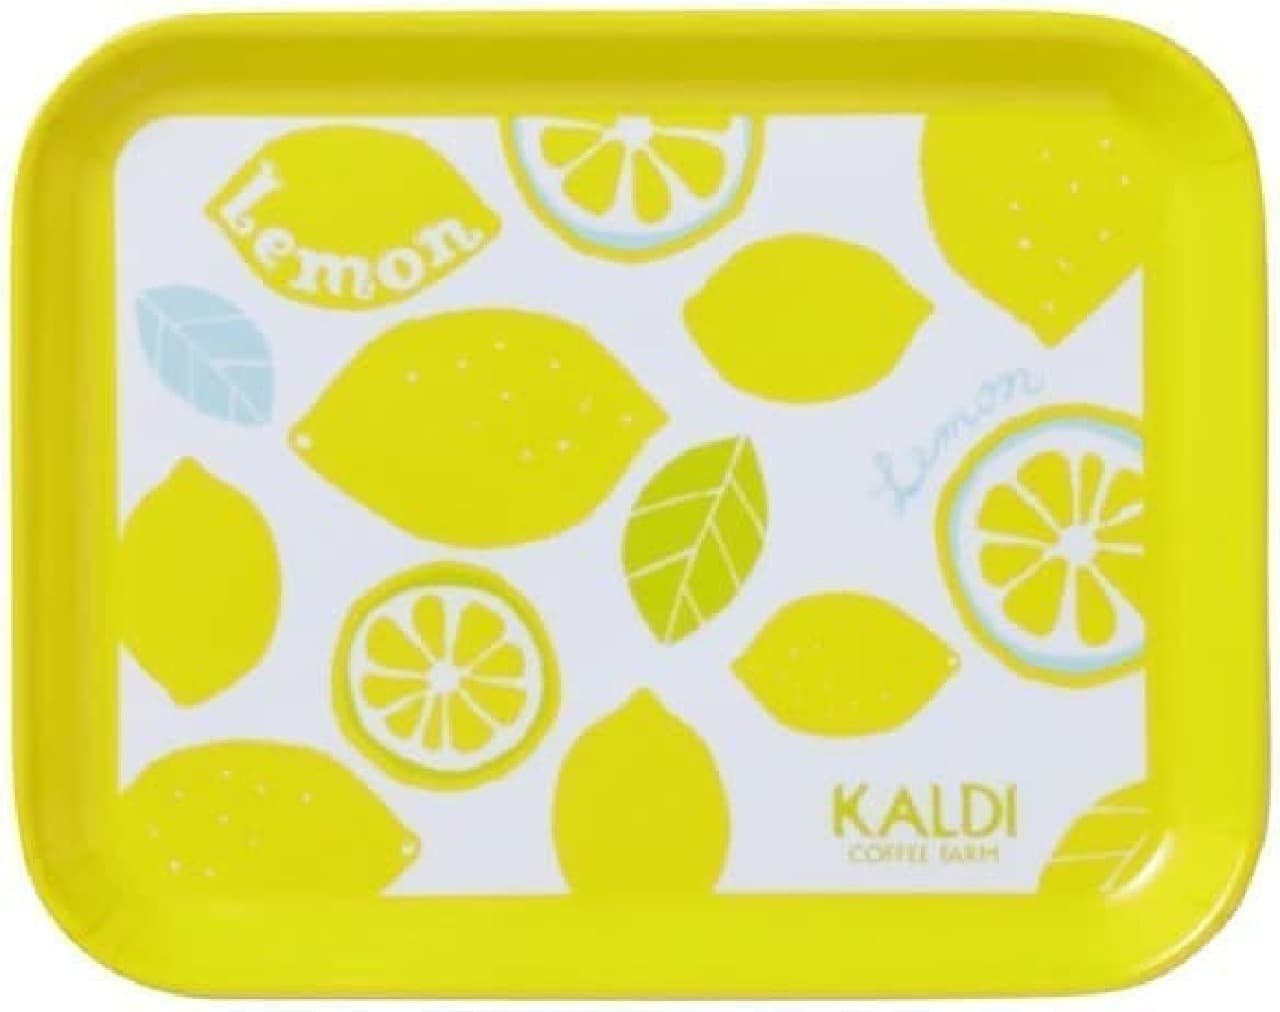 Limited number of "lemon bags" in KALDI